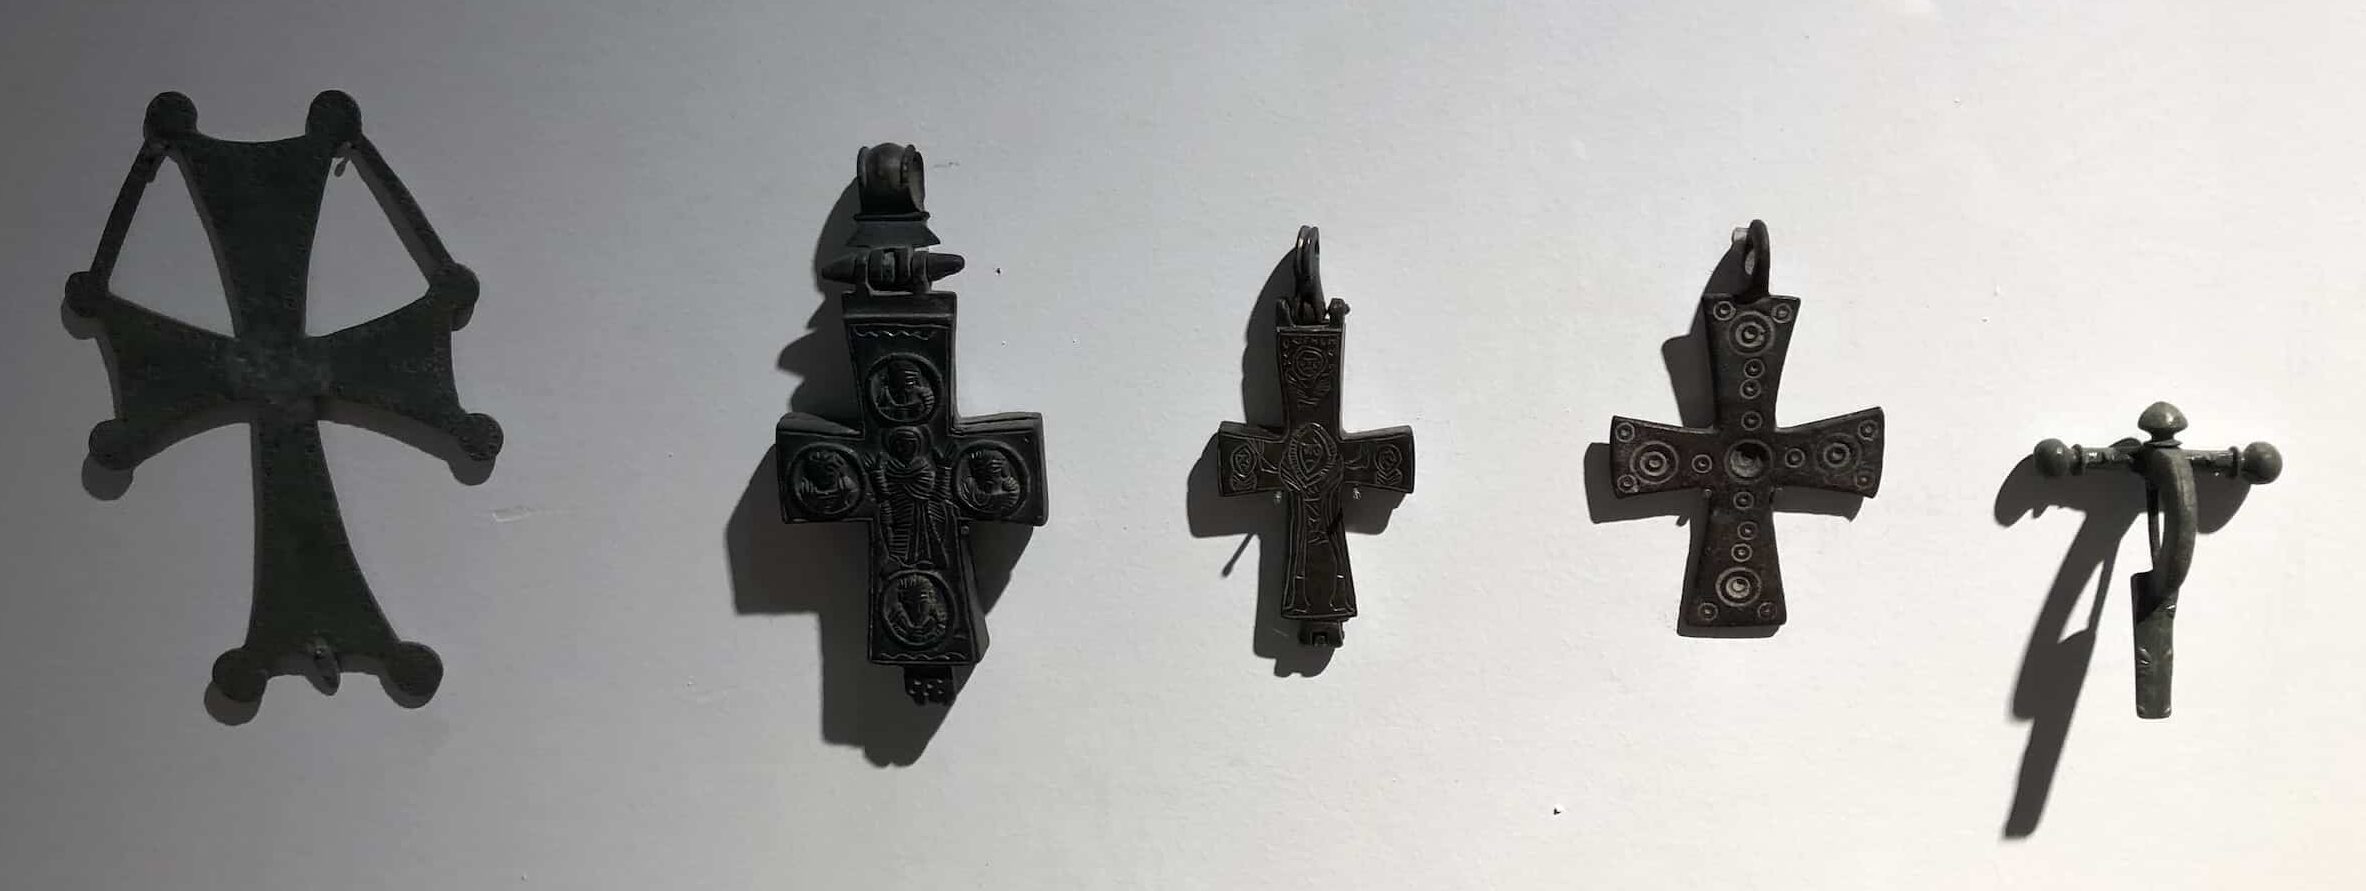 Bronze crosses at the Erimtan Archaeology and Arts Museum in Ankara, Turkey